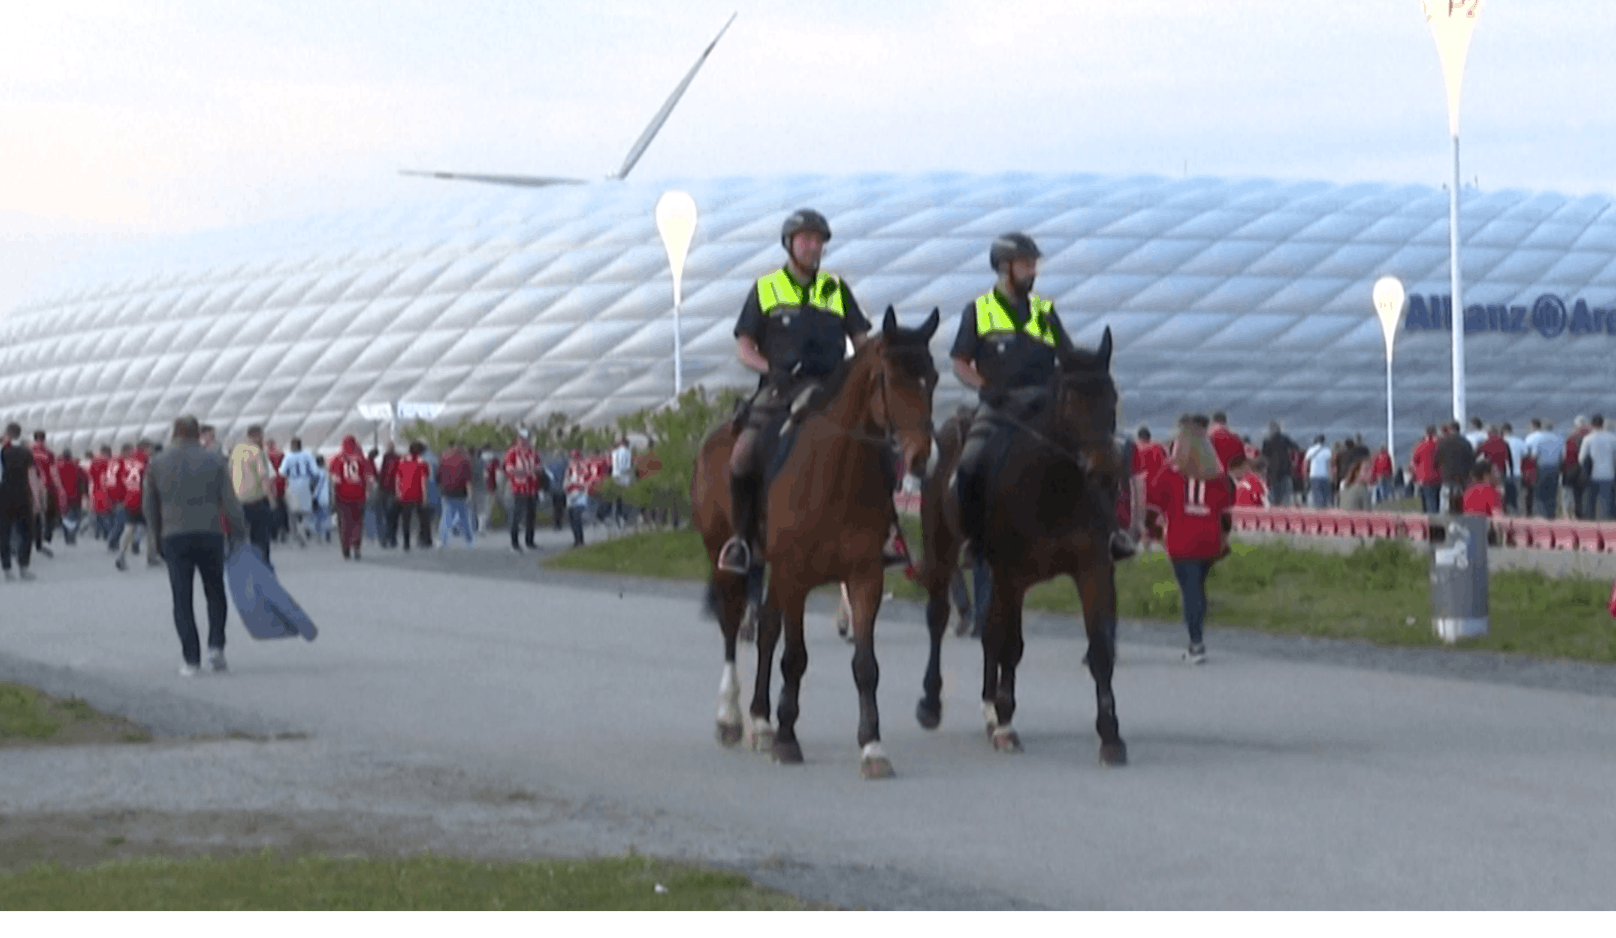 Fußball-EM fordert Sicherheitskräfte enorm